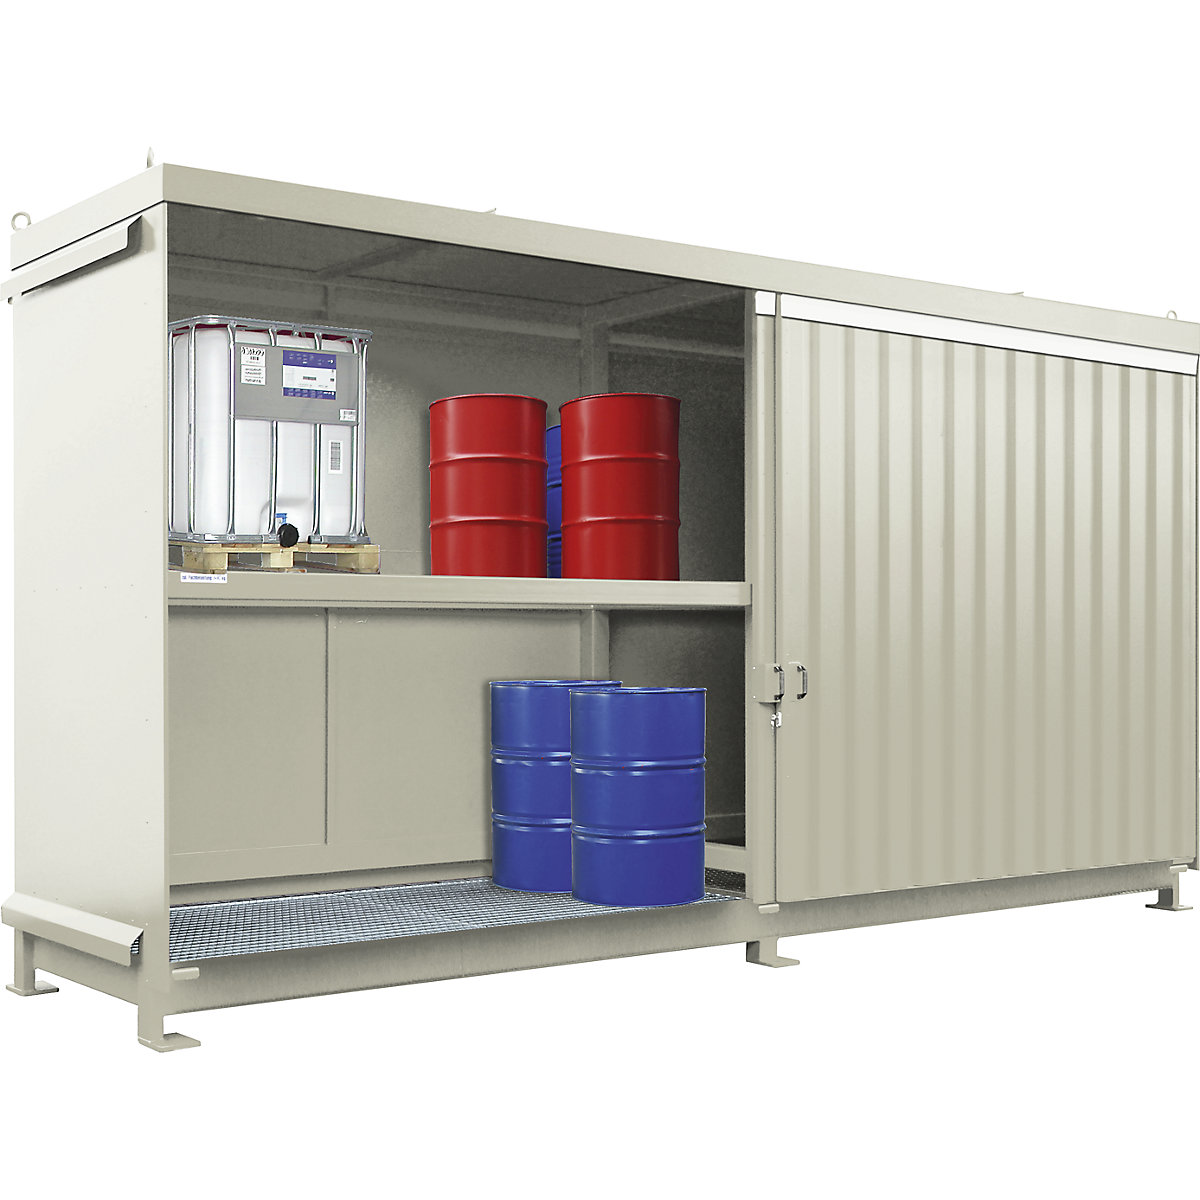 Regalni kontejner za opasne tvari – eurokraft pro, kapacitet 8 x kontejnera IBC/KTC volumena 1000 l, u sivobijeloj boji-1